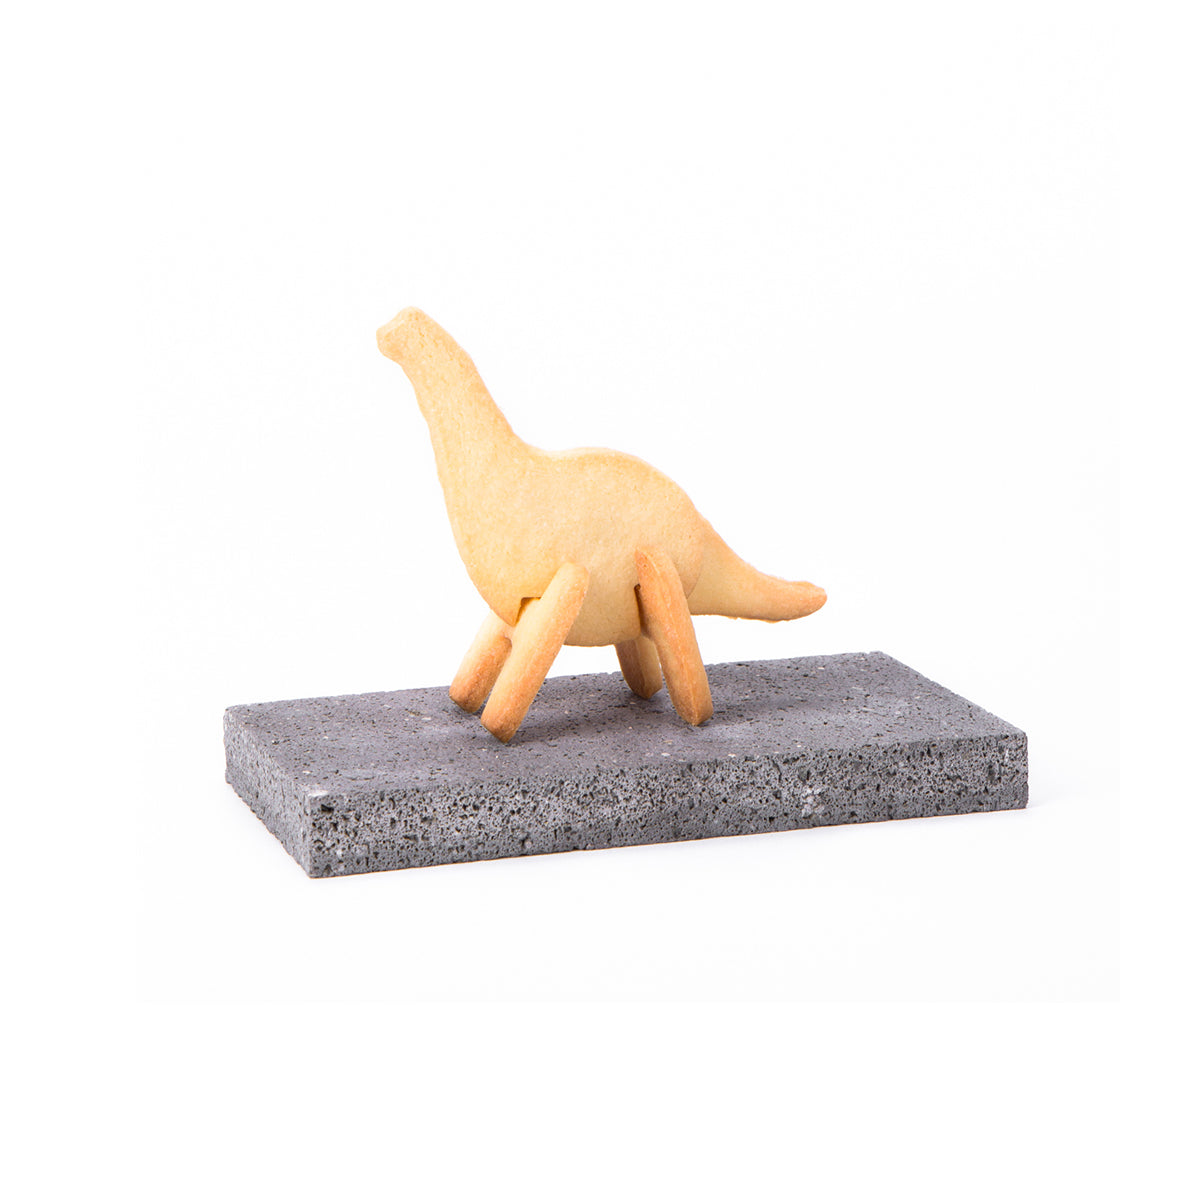 3D Dinosaur Cookie Cutters